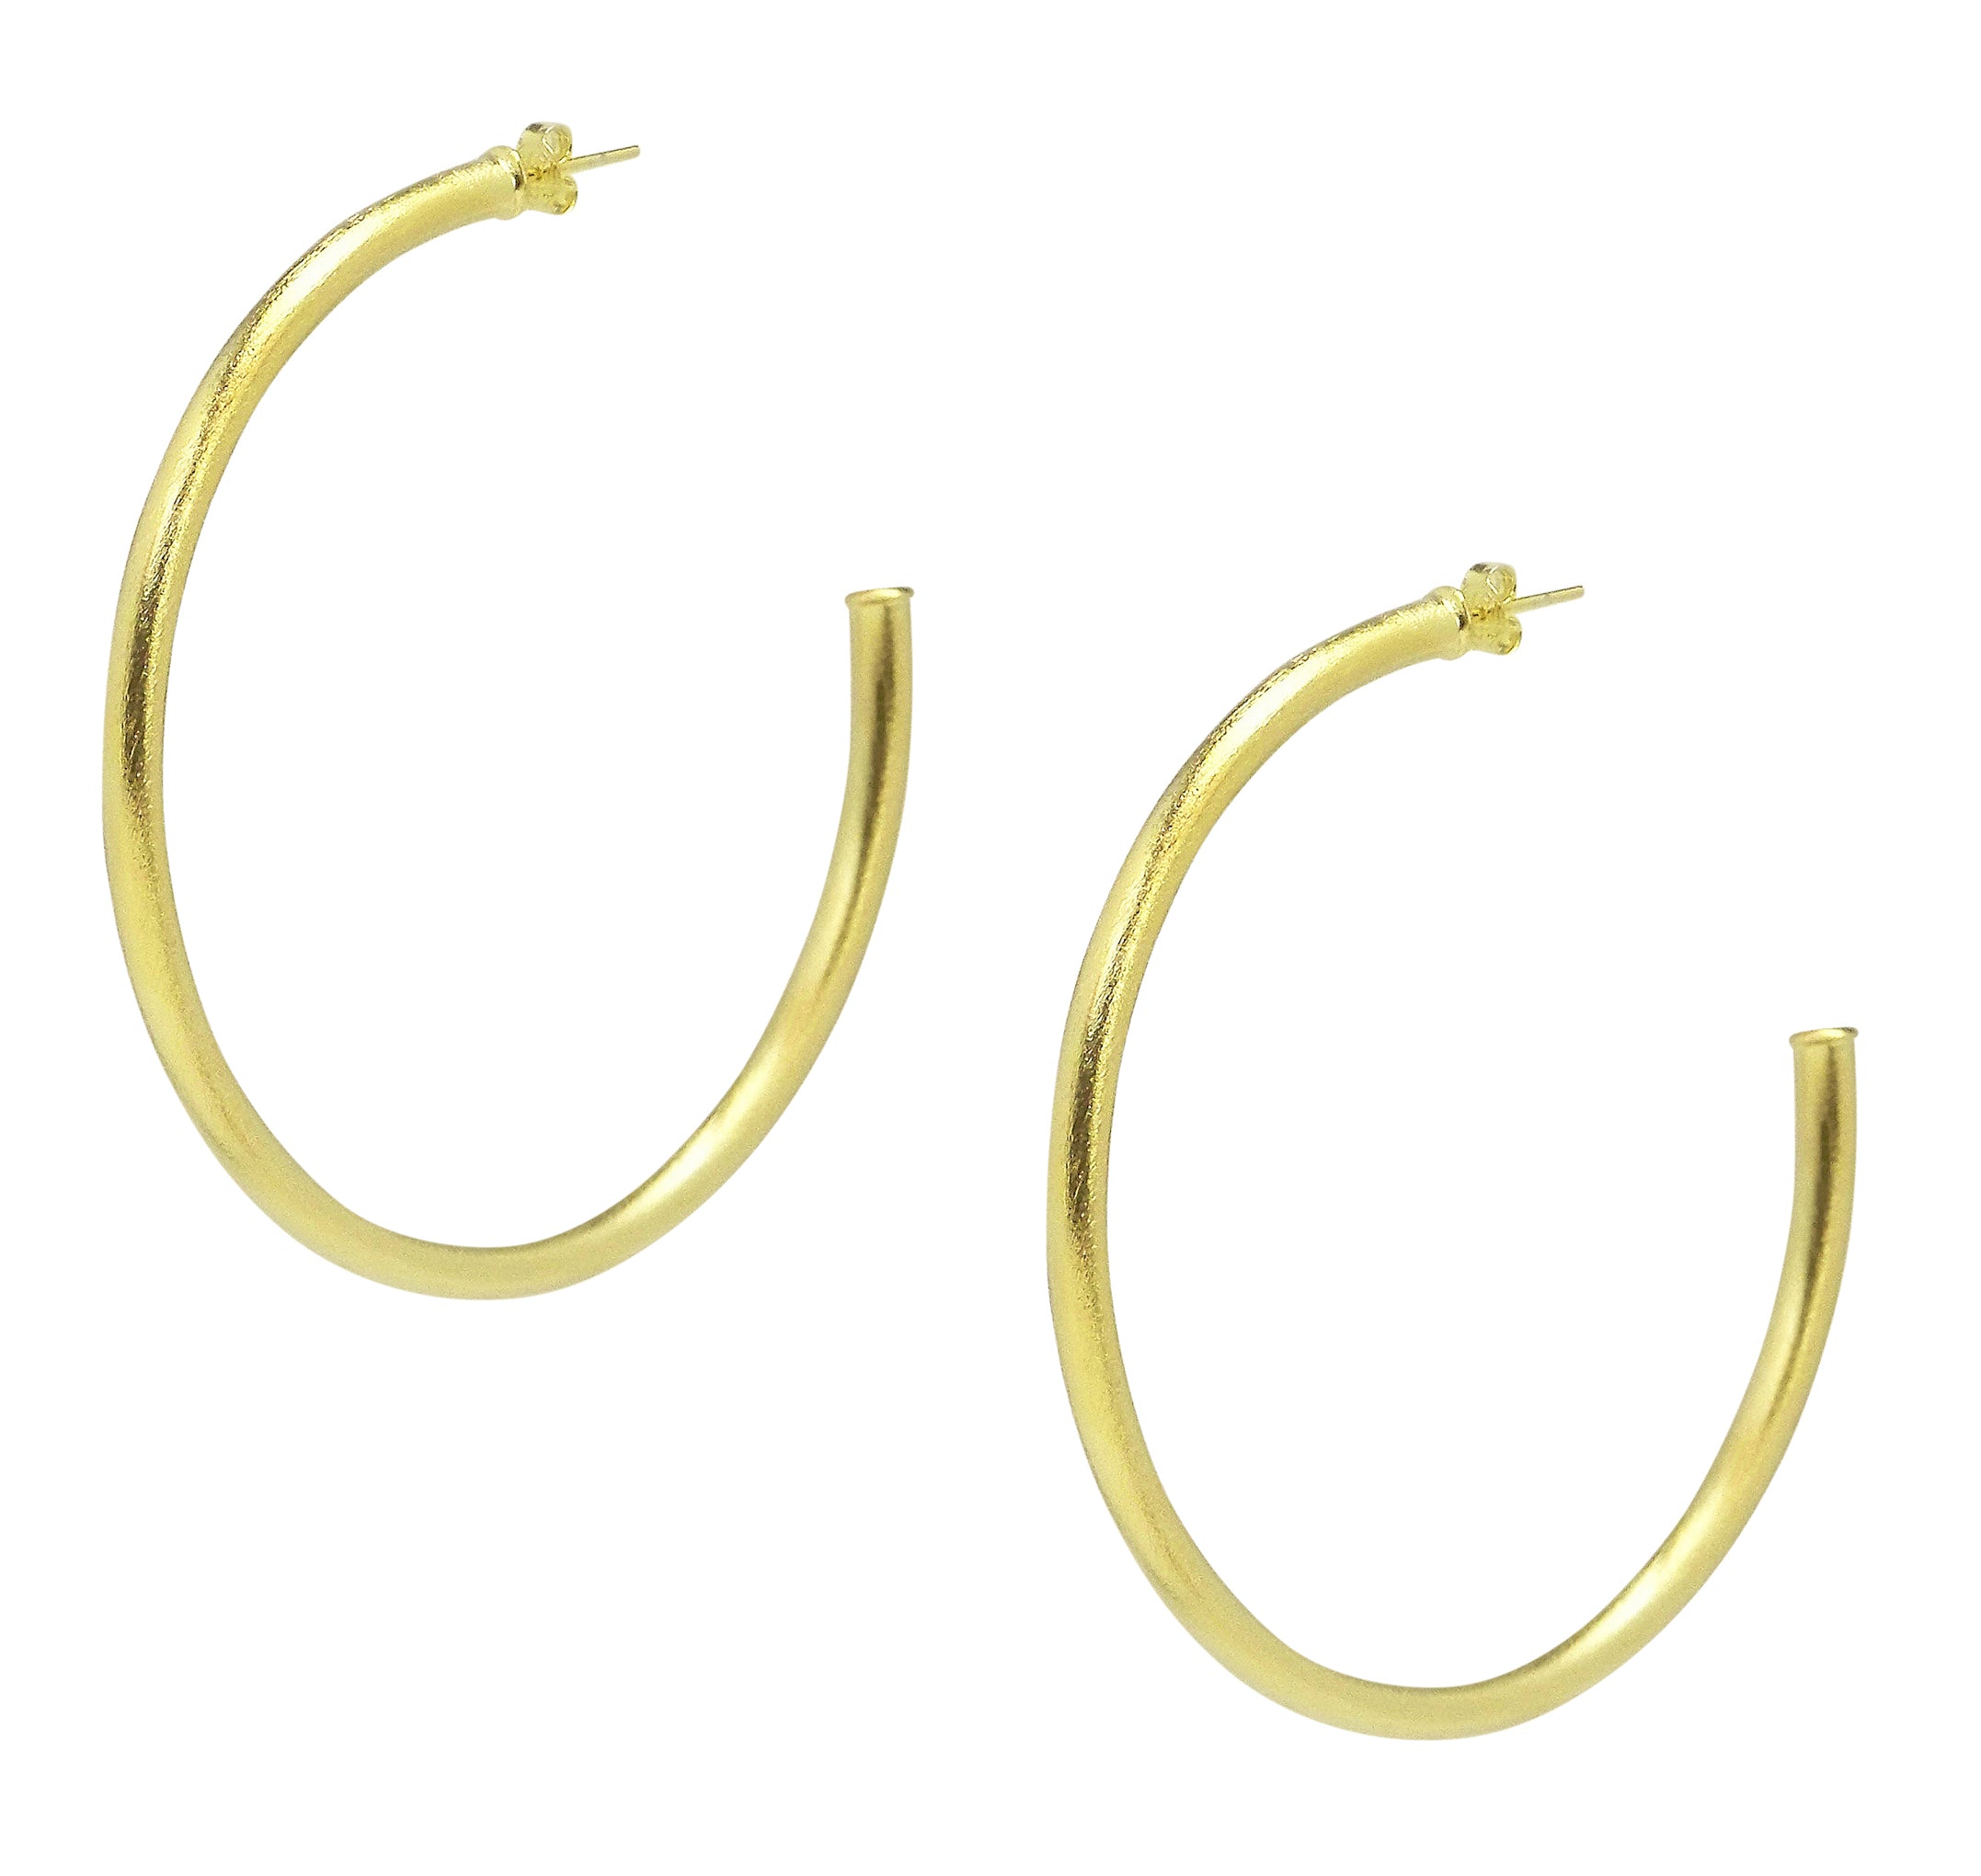 Pair of Sheila Fajl Liana Tubular Hoop Earrings in Gold